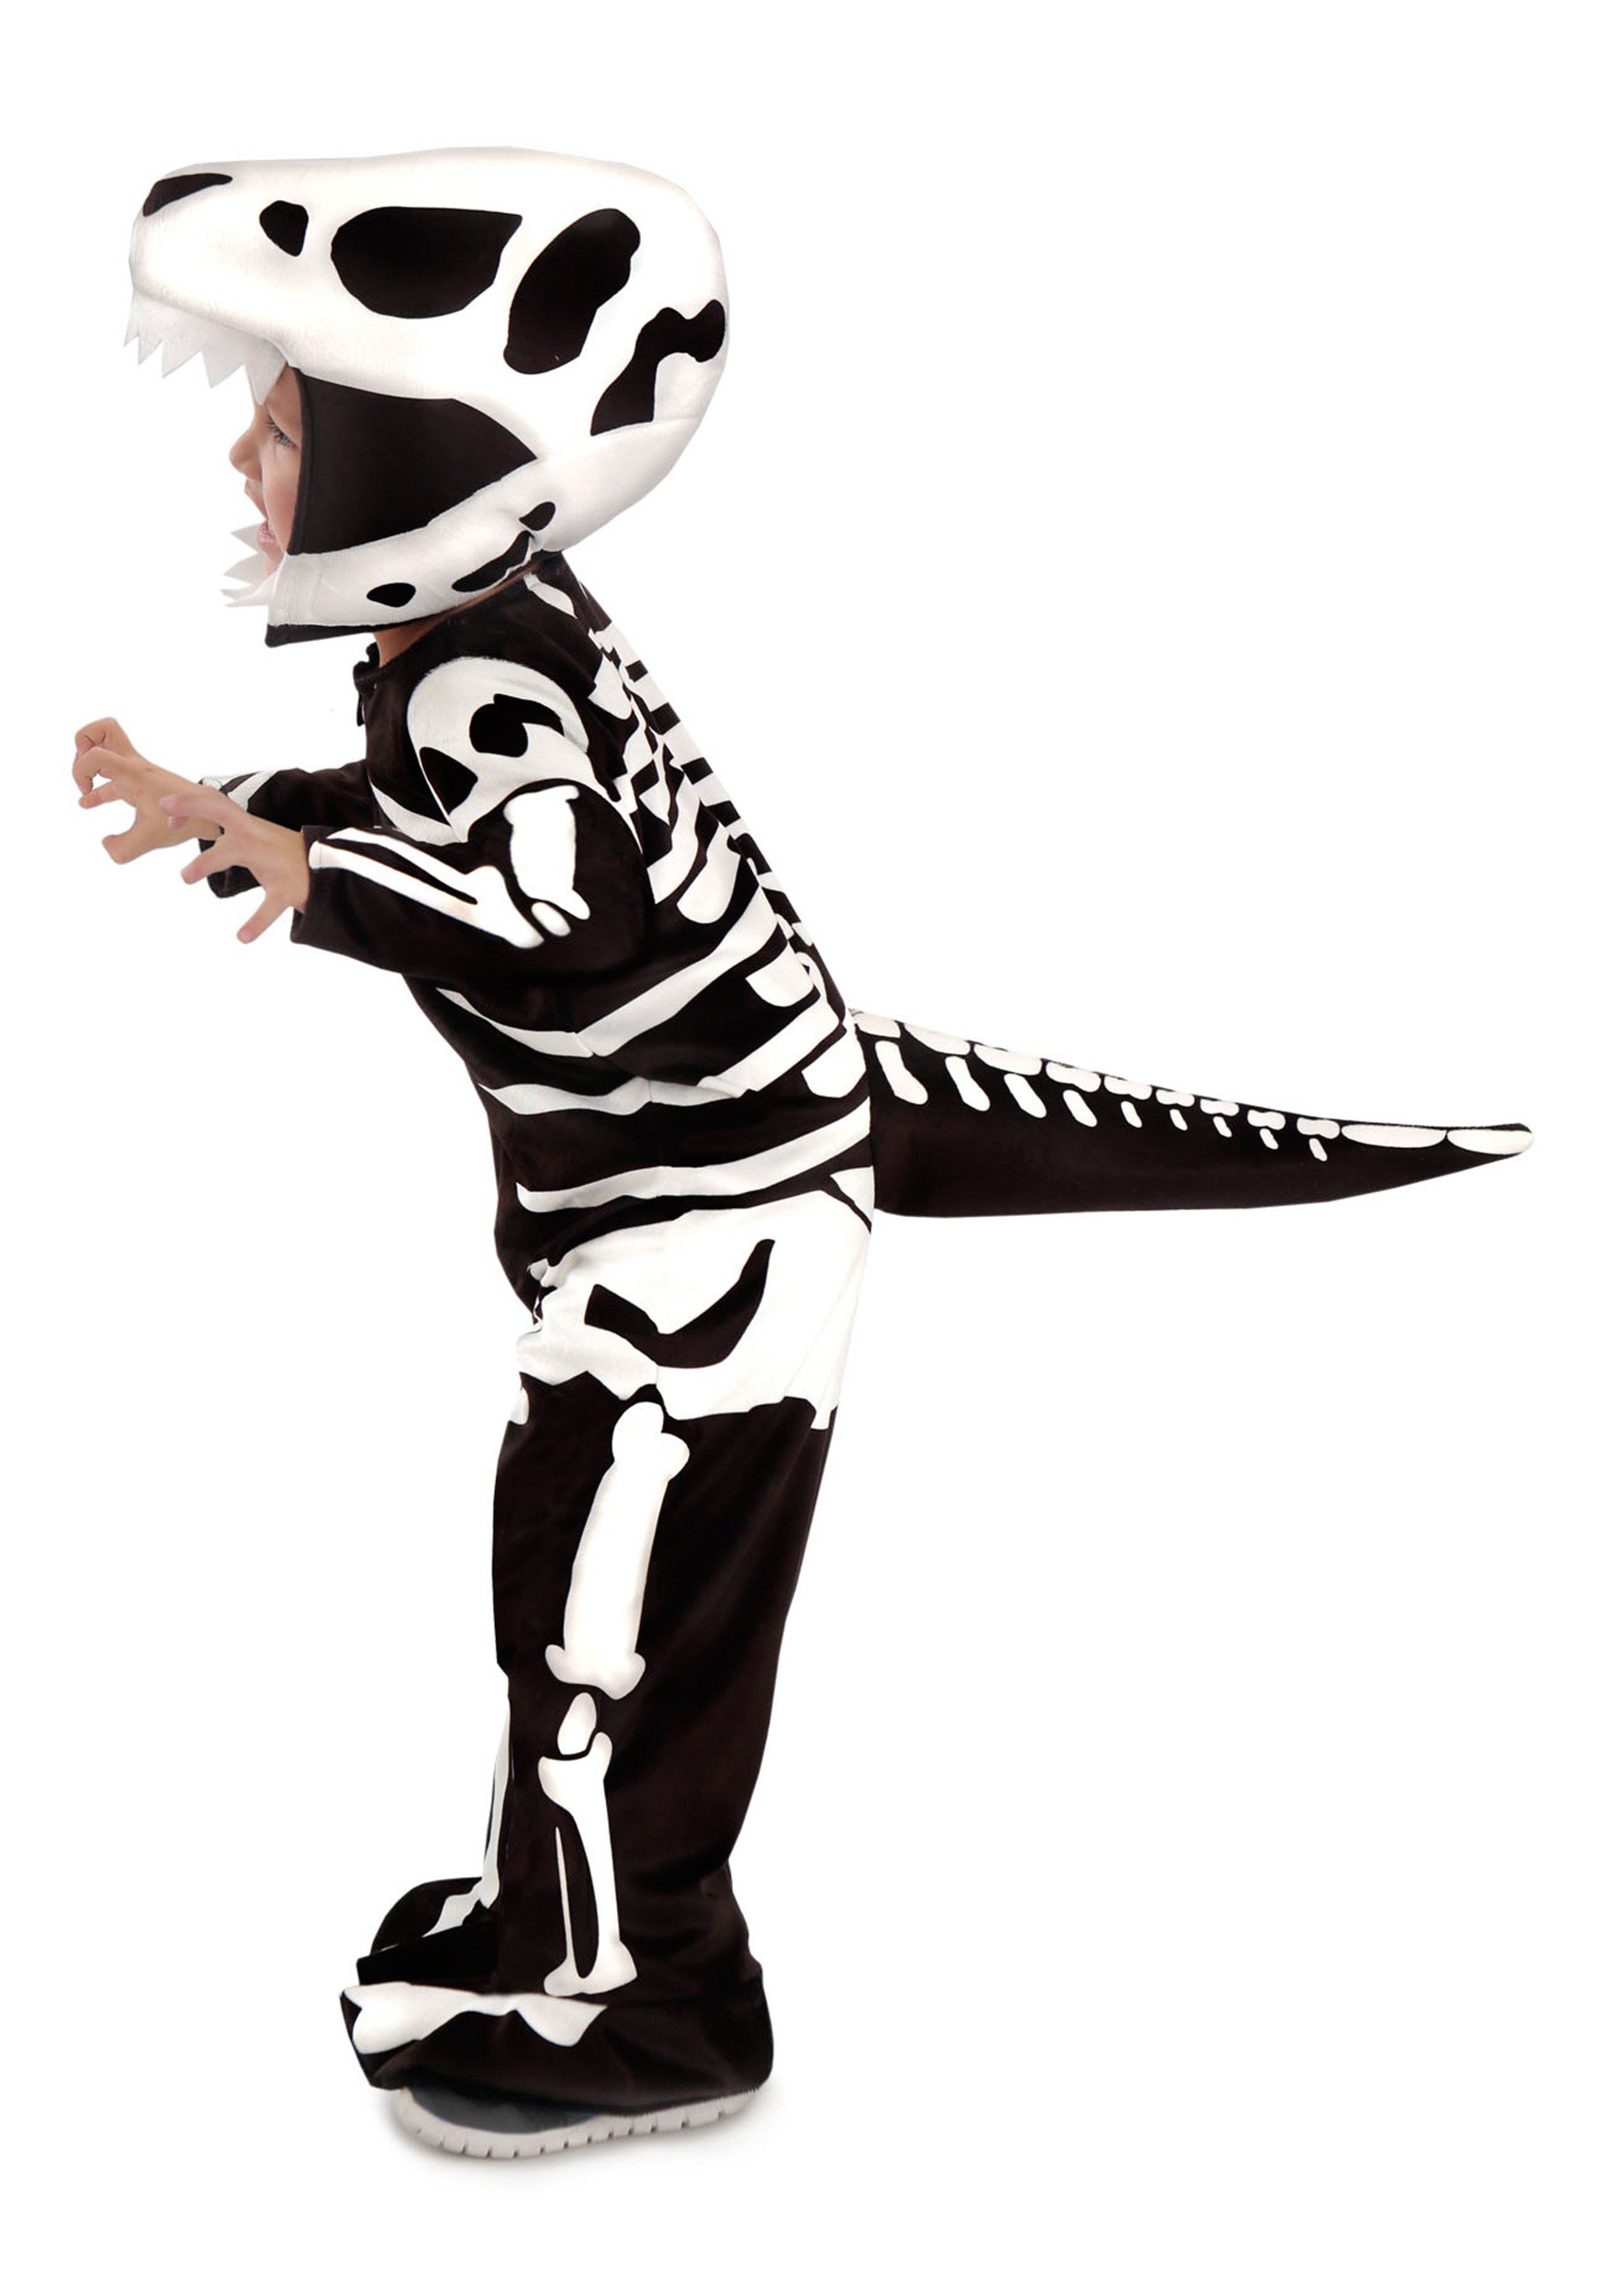 Dinosaur Costume Kids 18-24 Months Toddler Halloween T Rex Skeleton Outfit New